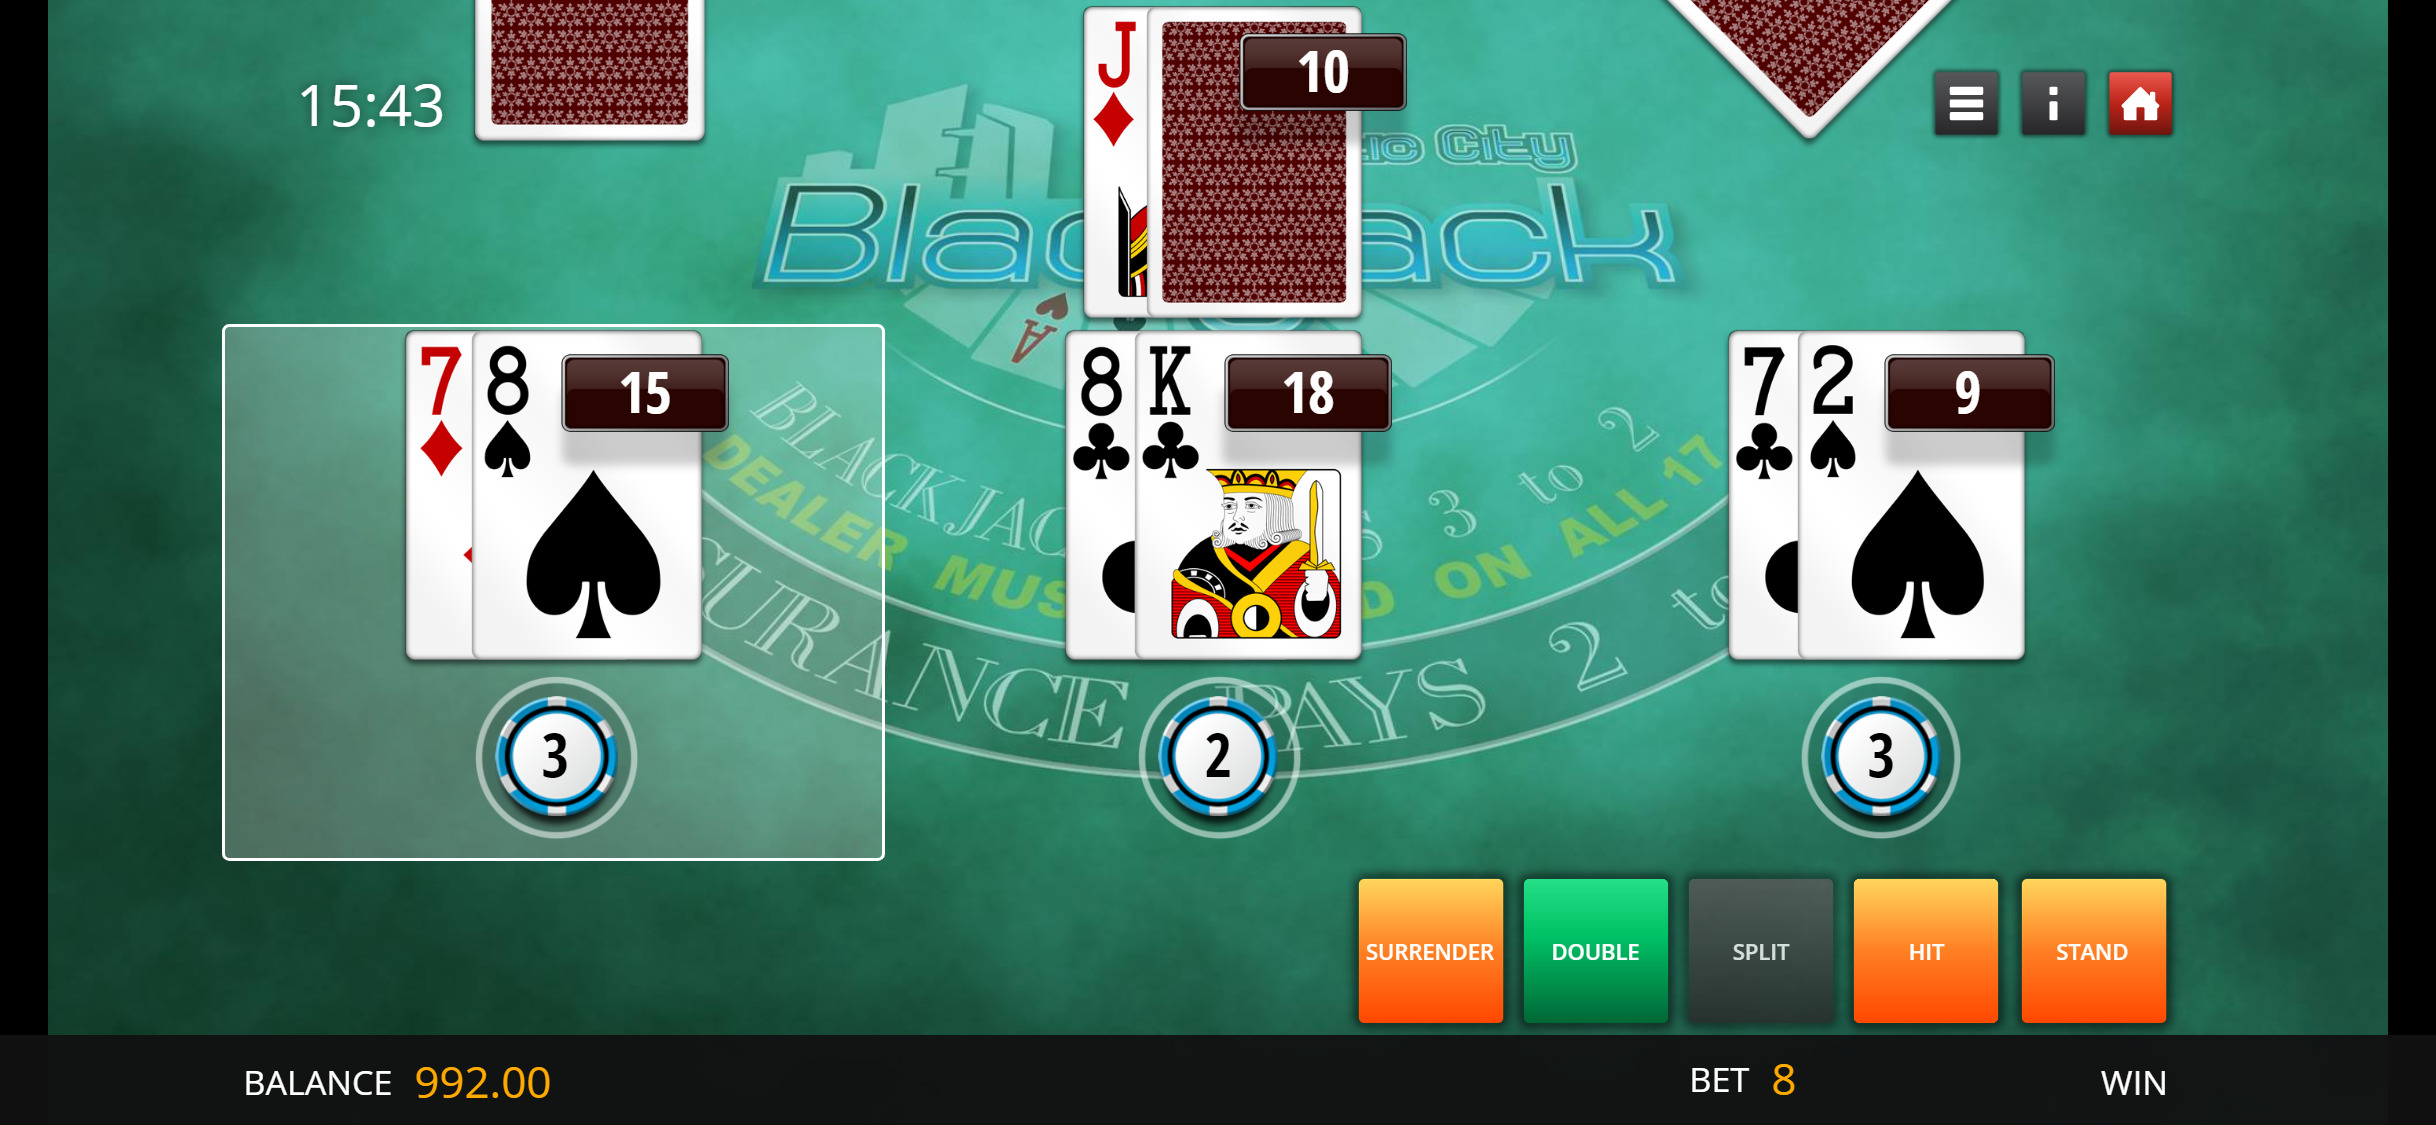 Pocket Casino Mobile Slots Review